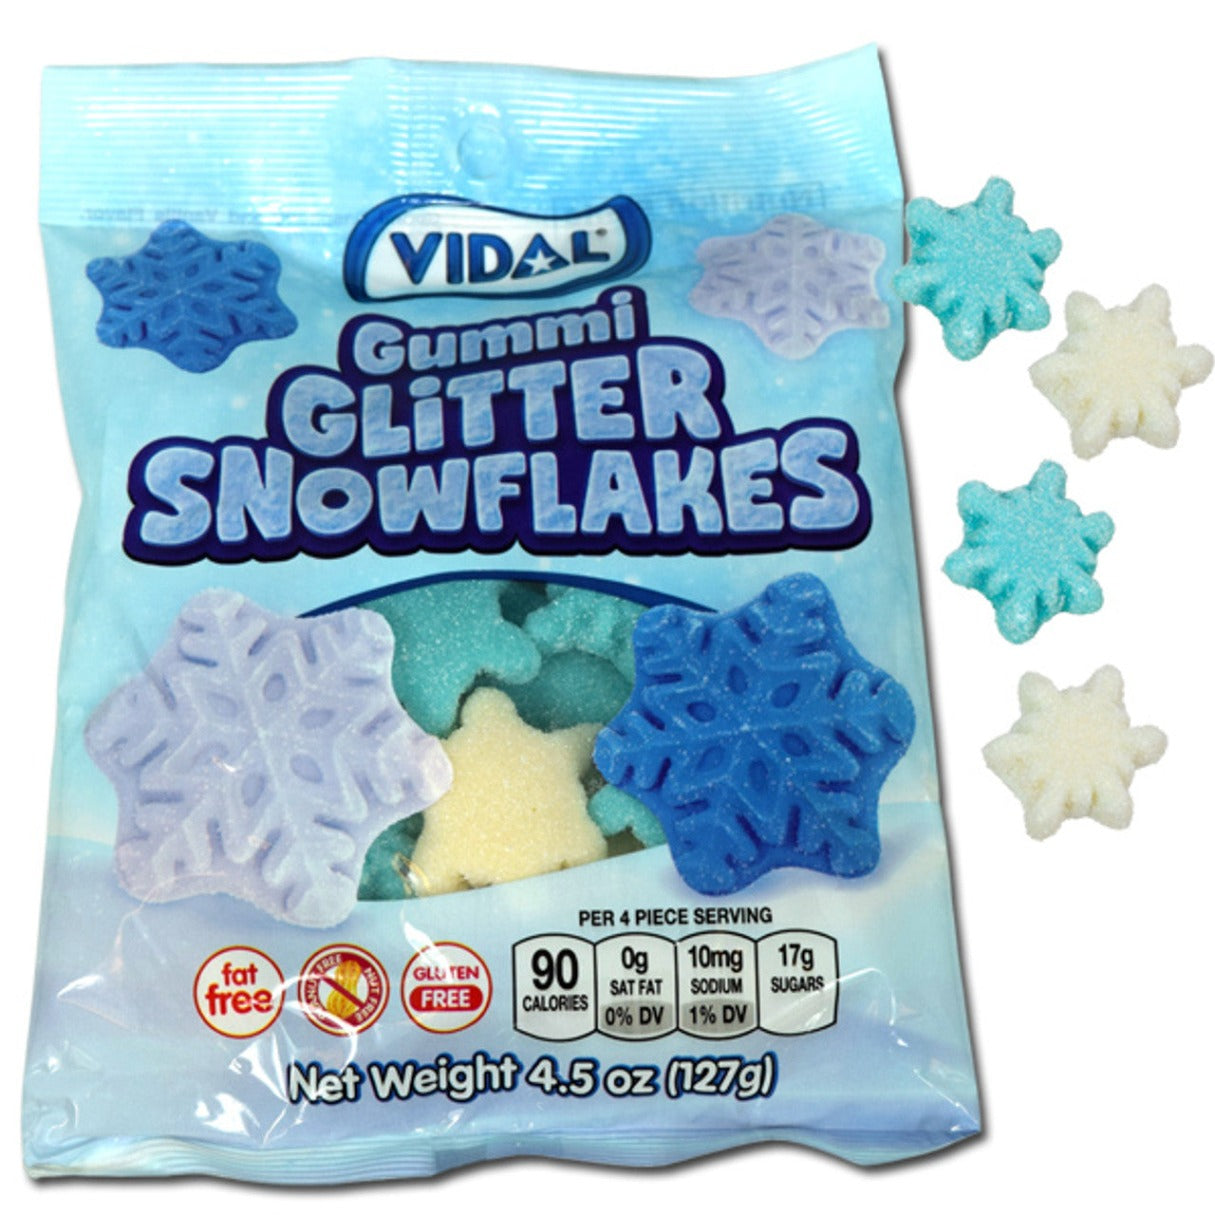 Vidal Gummi Glitter Snowflakes Bag 4.5oz - 6ct